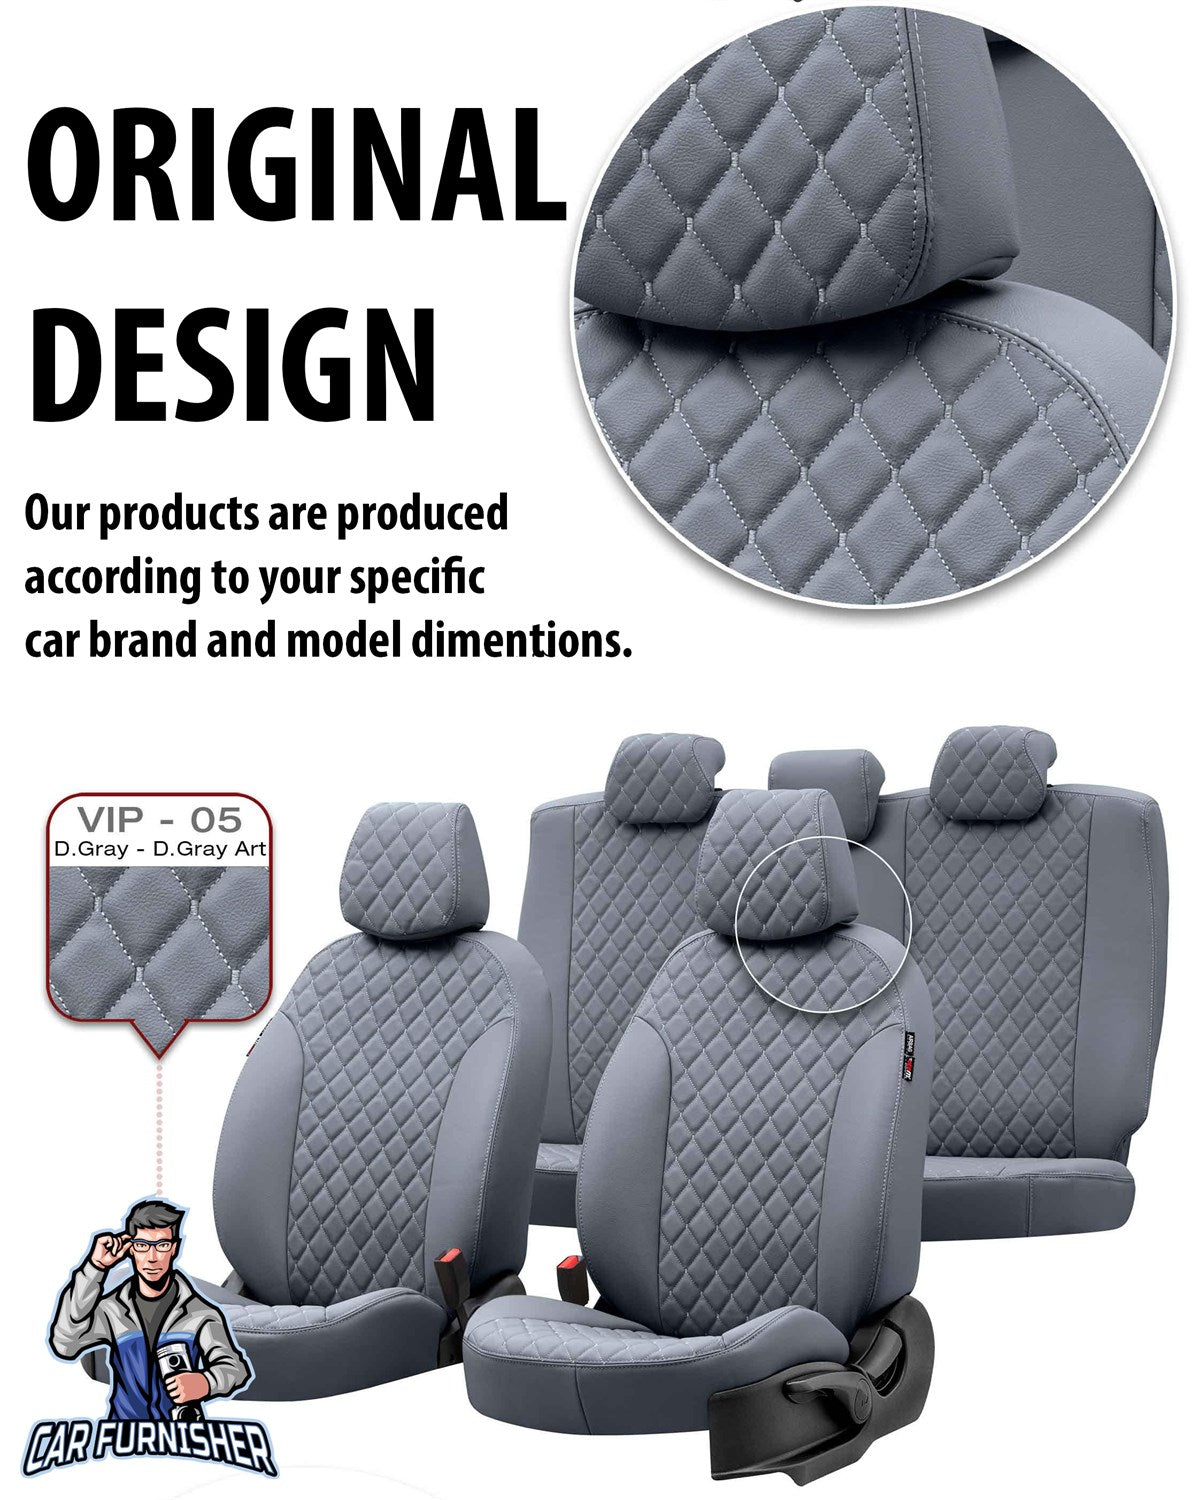 Hyundai Tucson Seat Covers Madrid Leather Design Smoked Leather